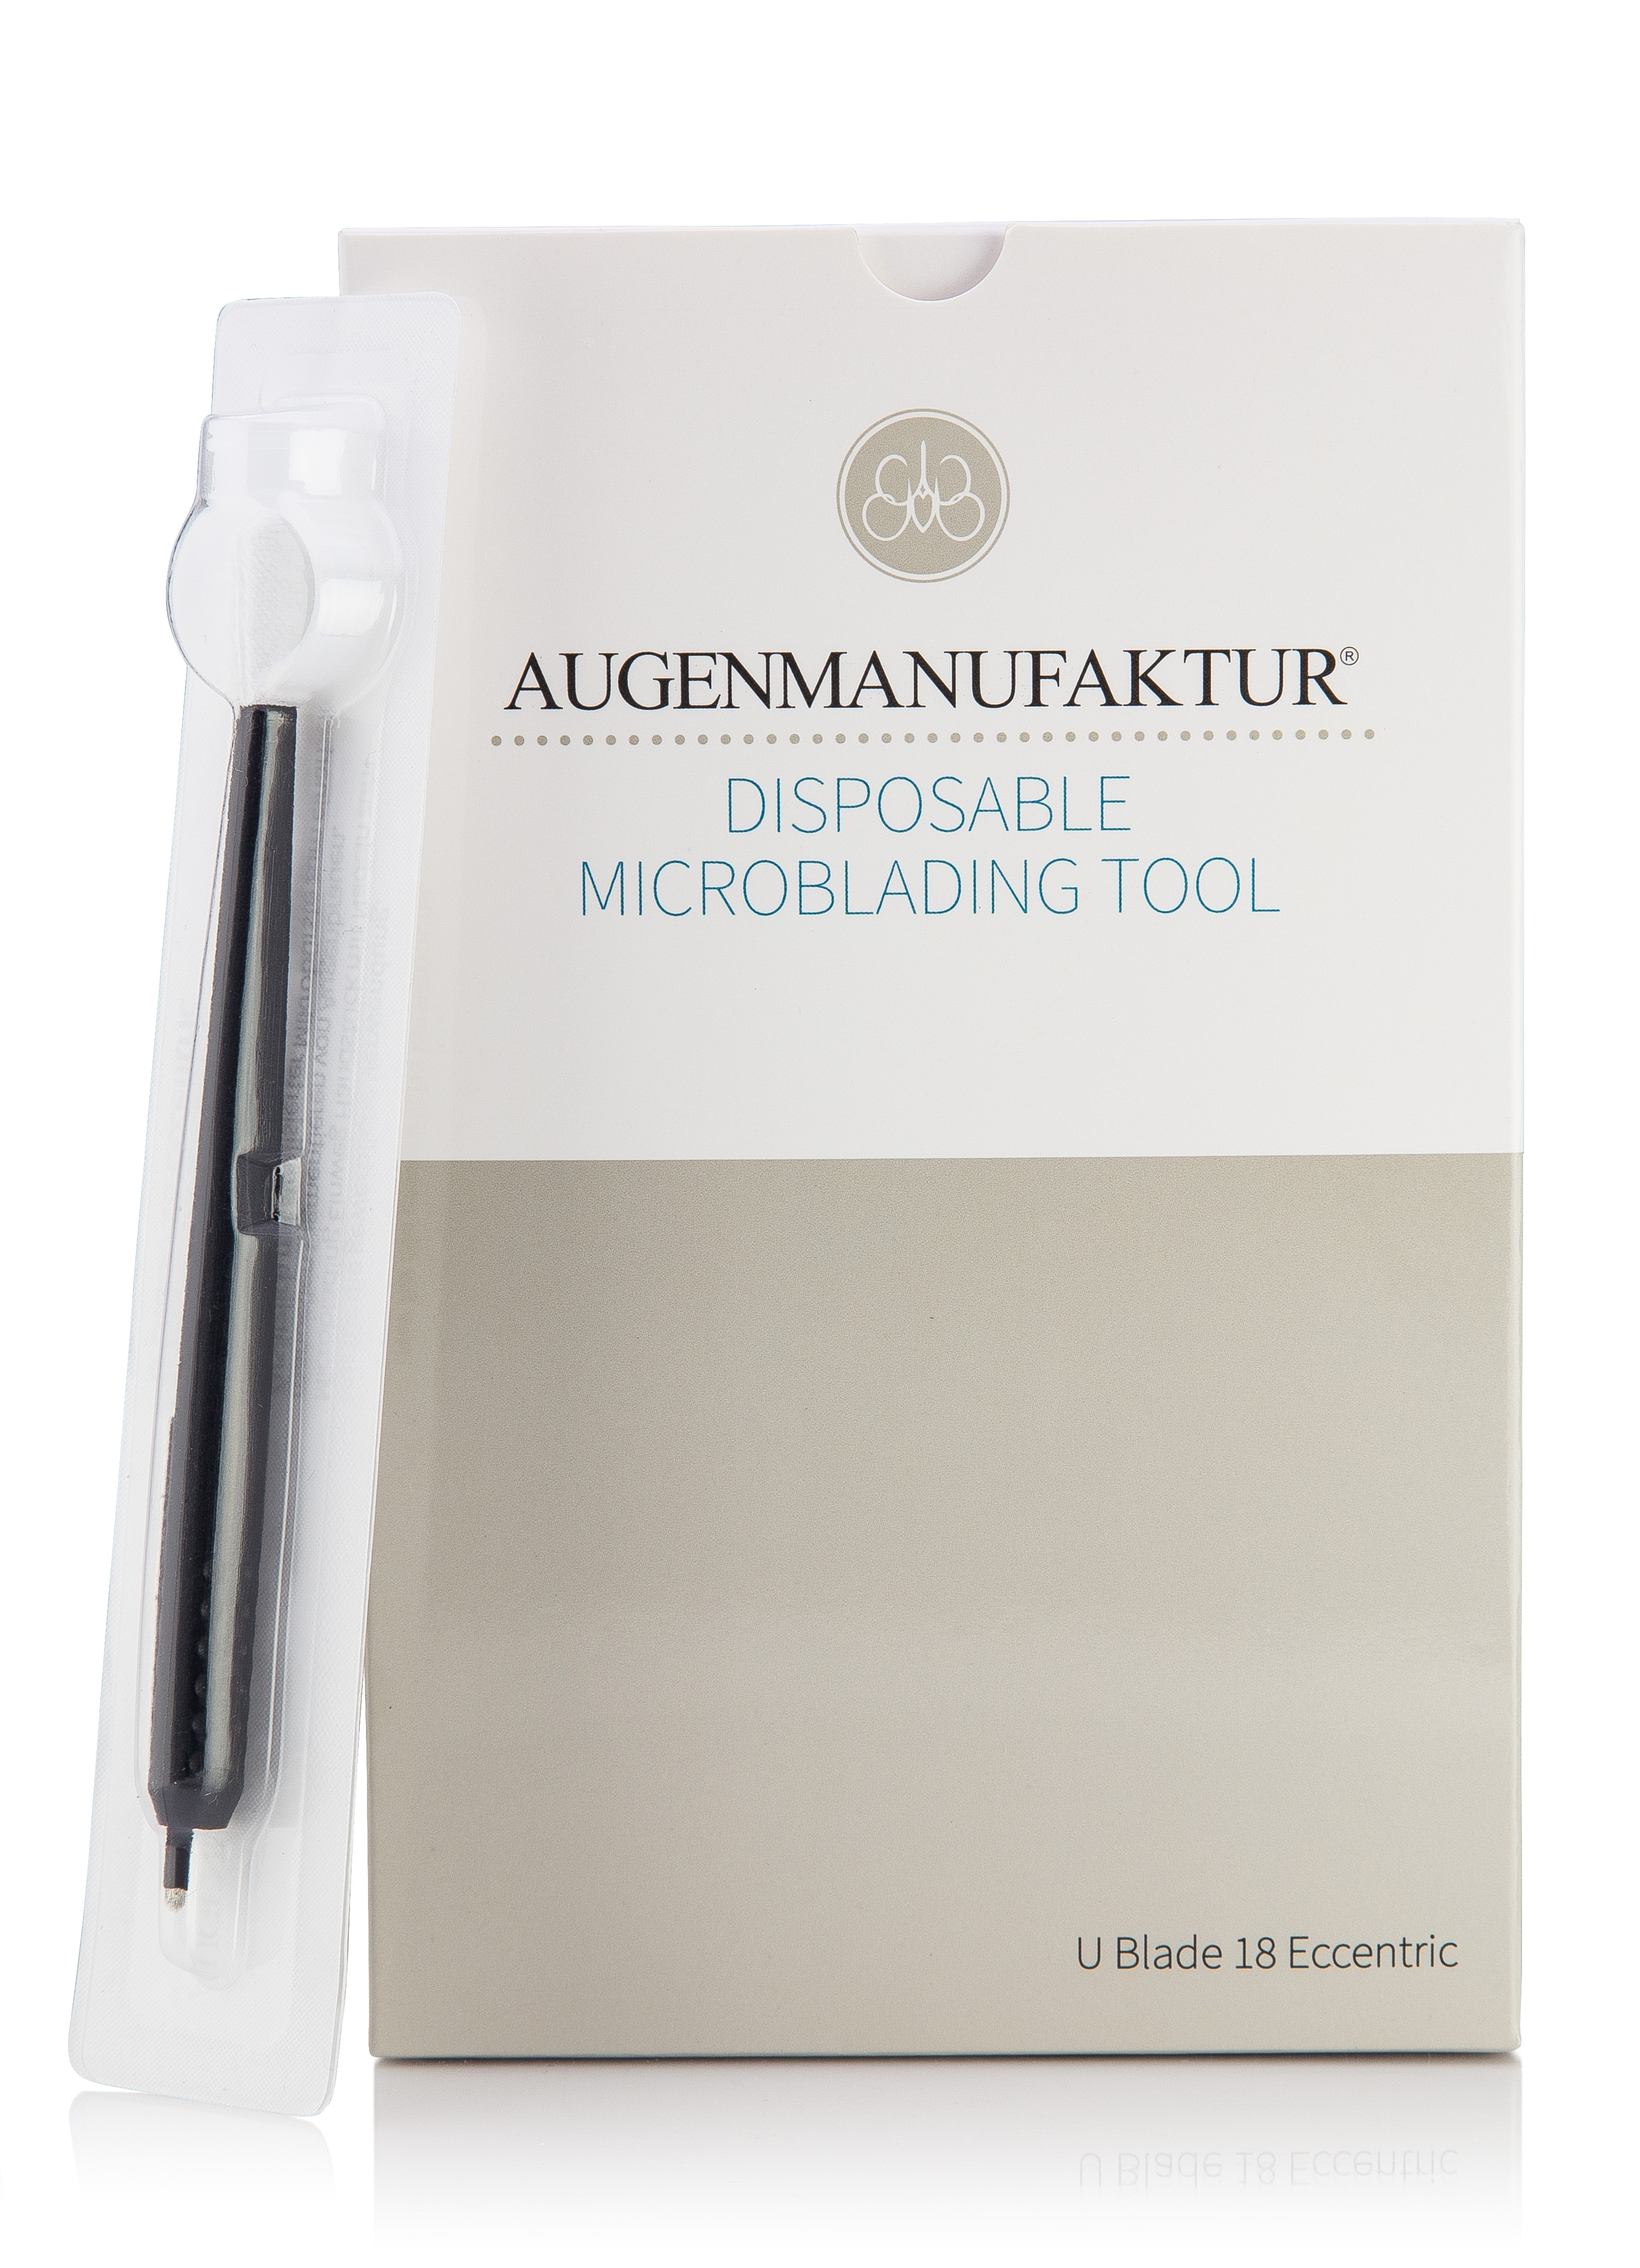 AUGENMANUFAKTUR - Disposable Microblading Tool